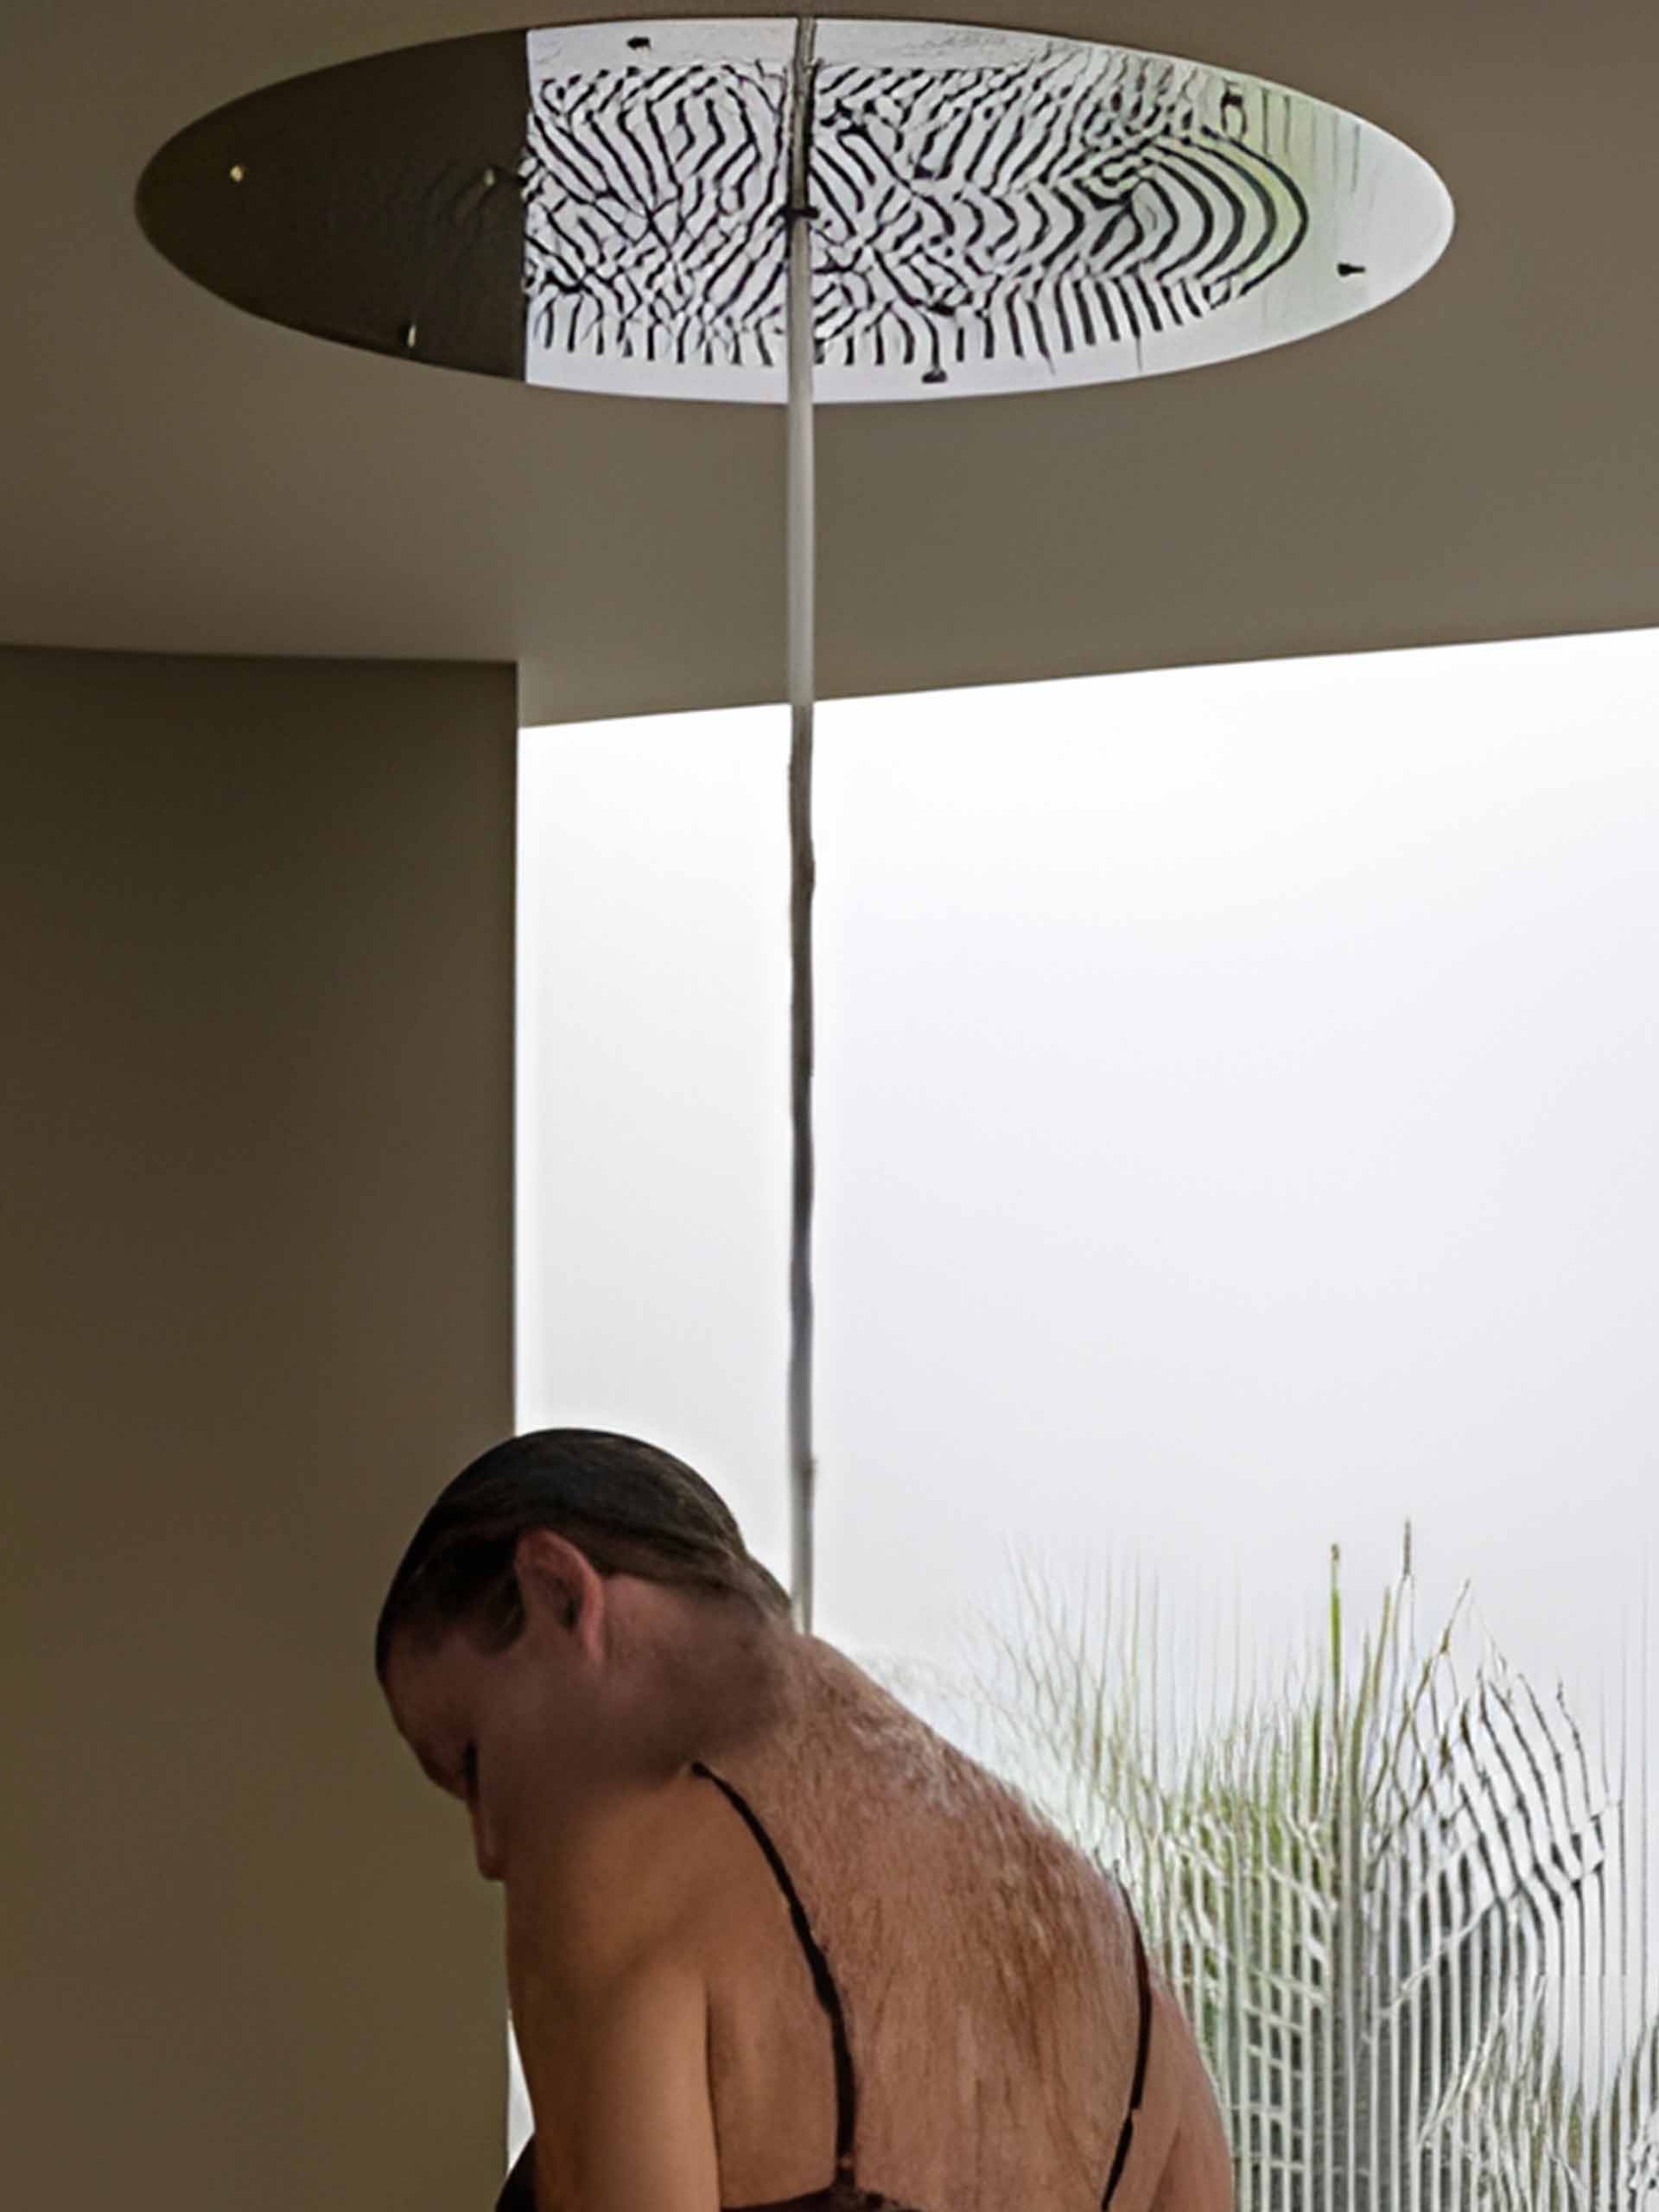 Exquisite Berlin shower system design.